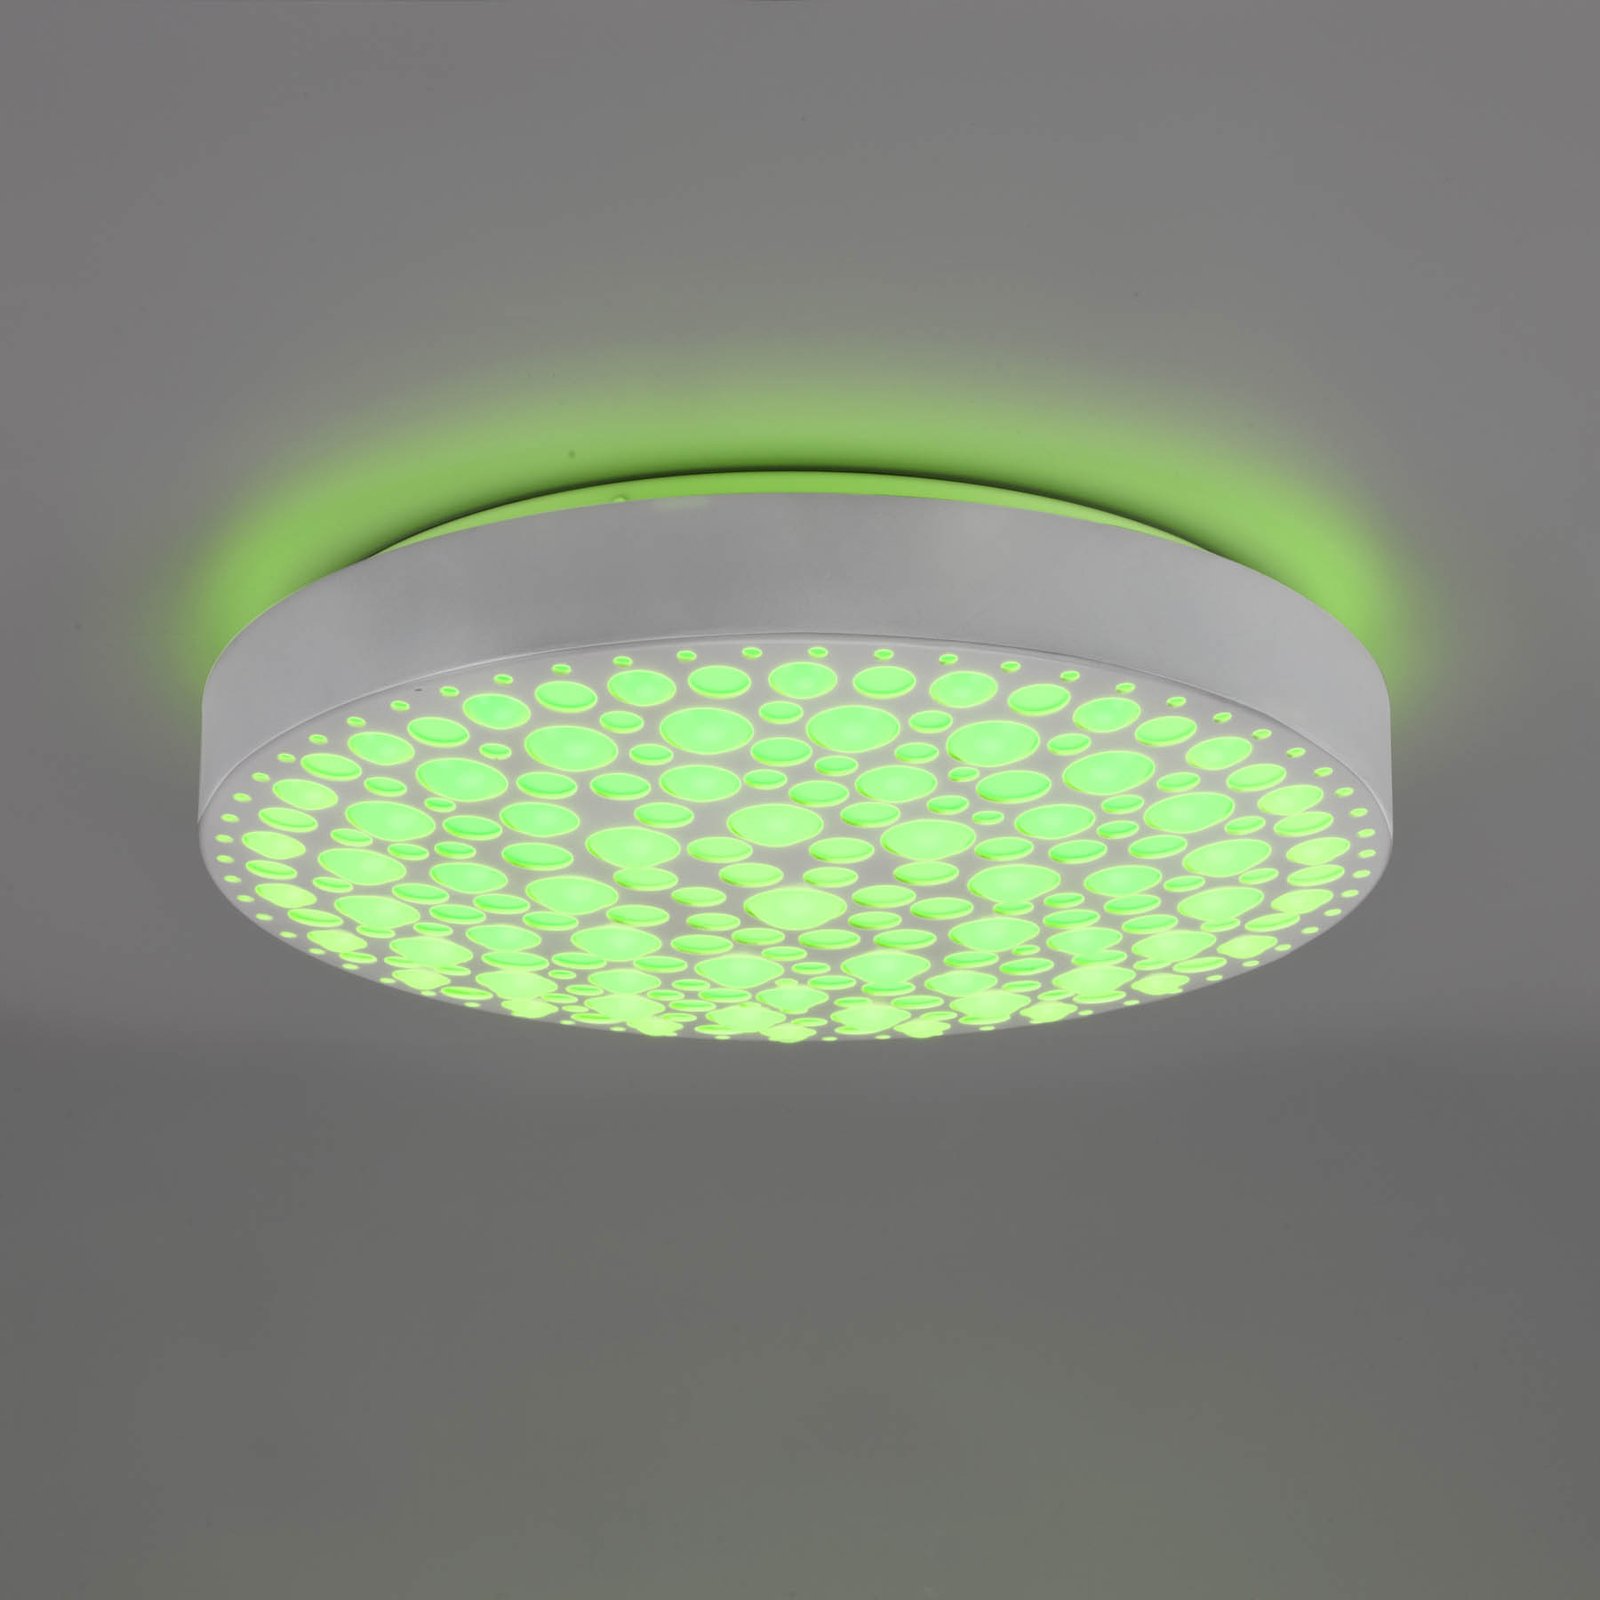 LED-taklampa Chizu Ø 40,5 cm dimbar RGB vit